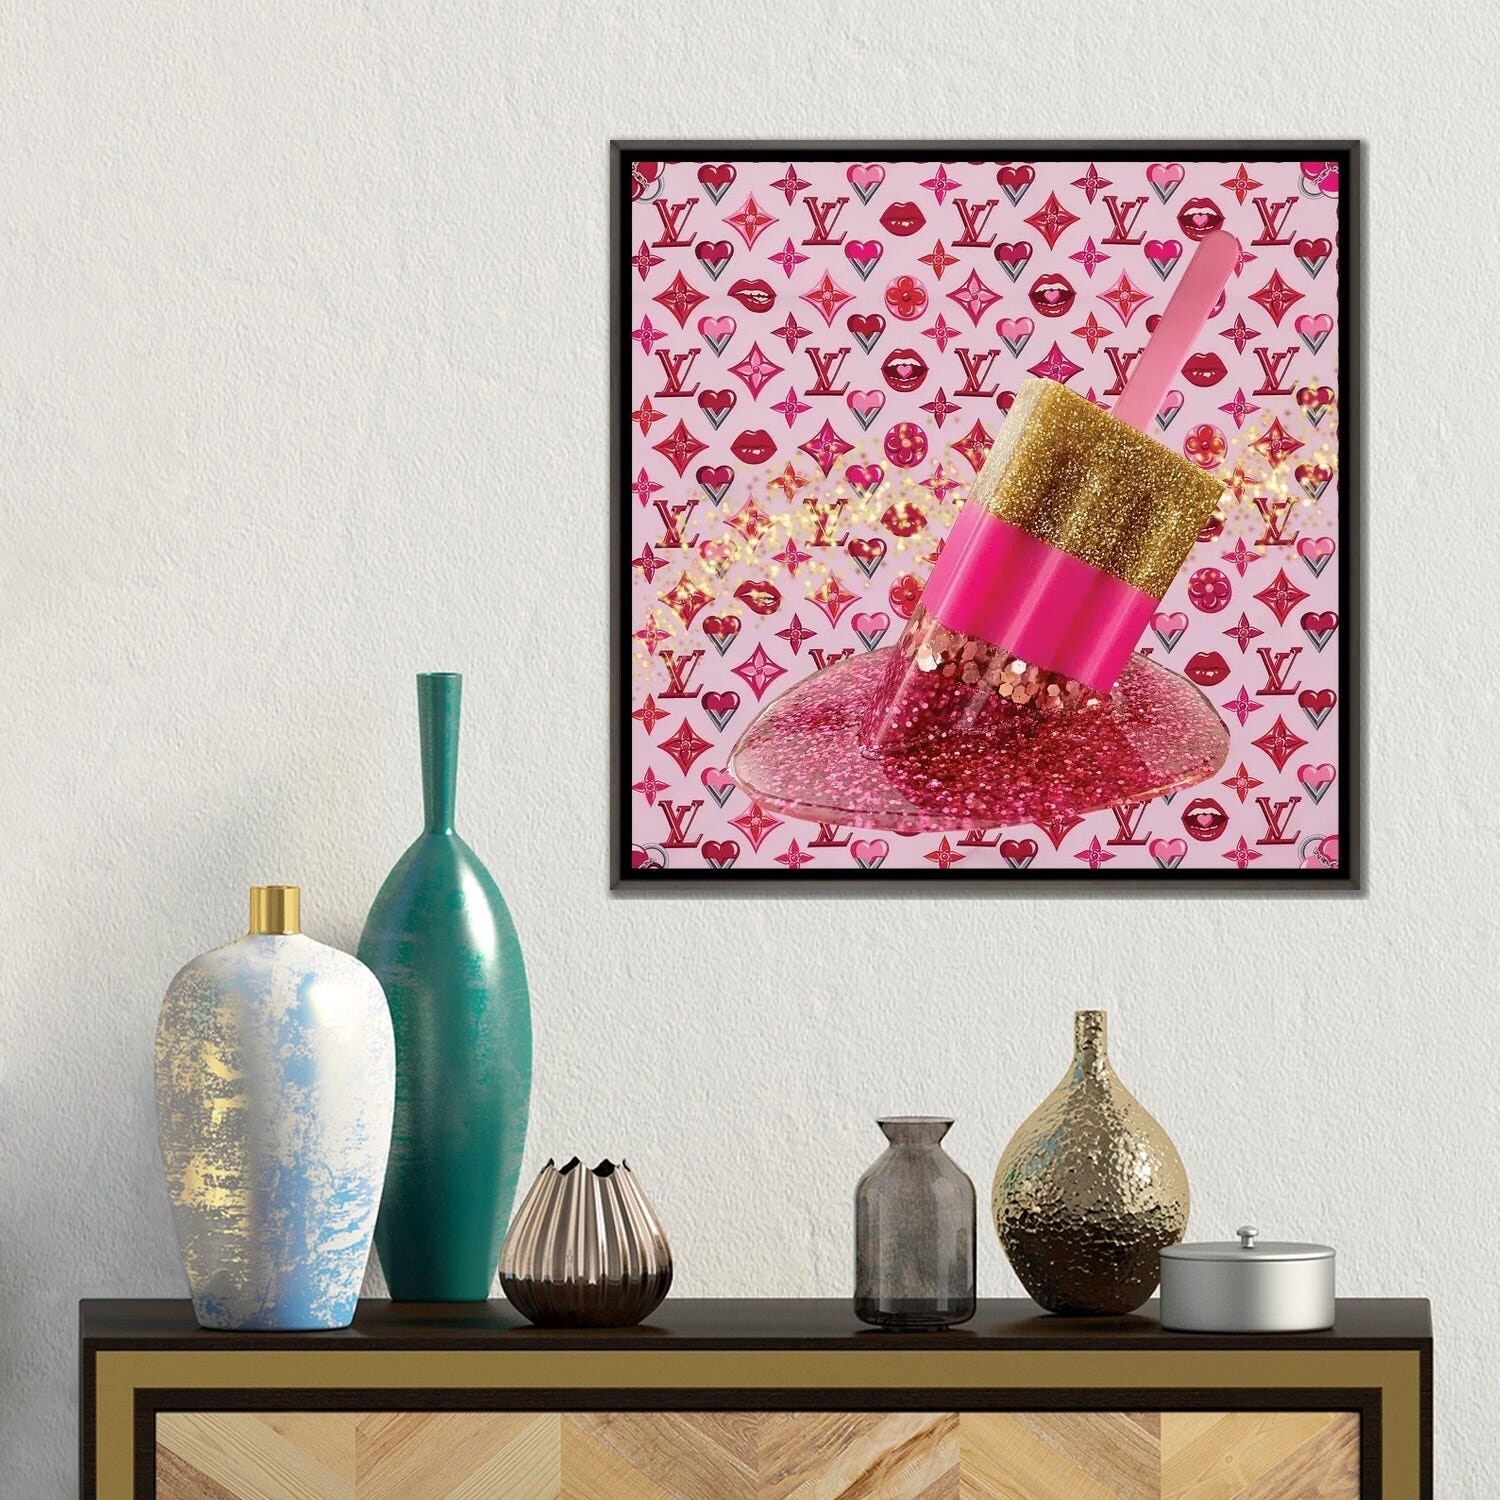 iCanvas LV Love Popsicle by Amy Shekhter Framed - Bed Bath